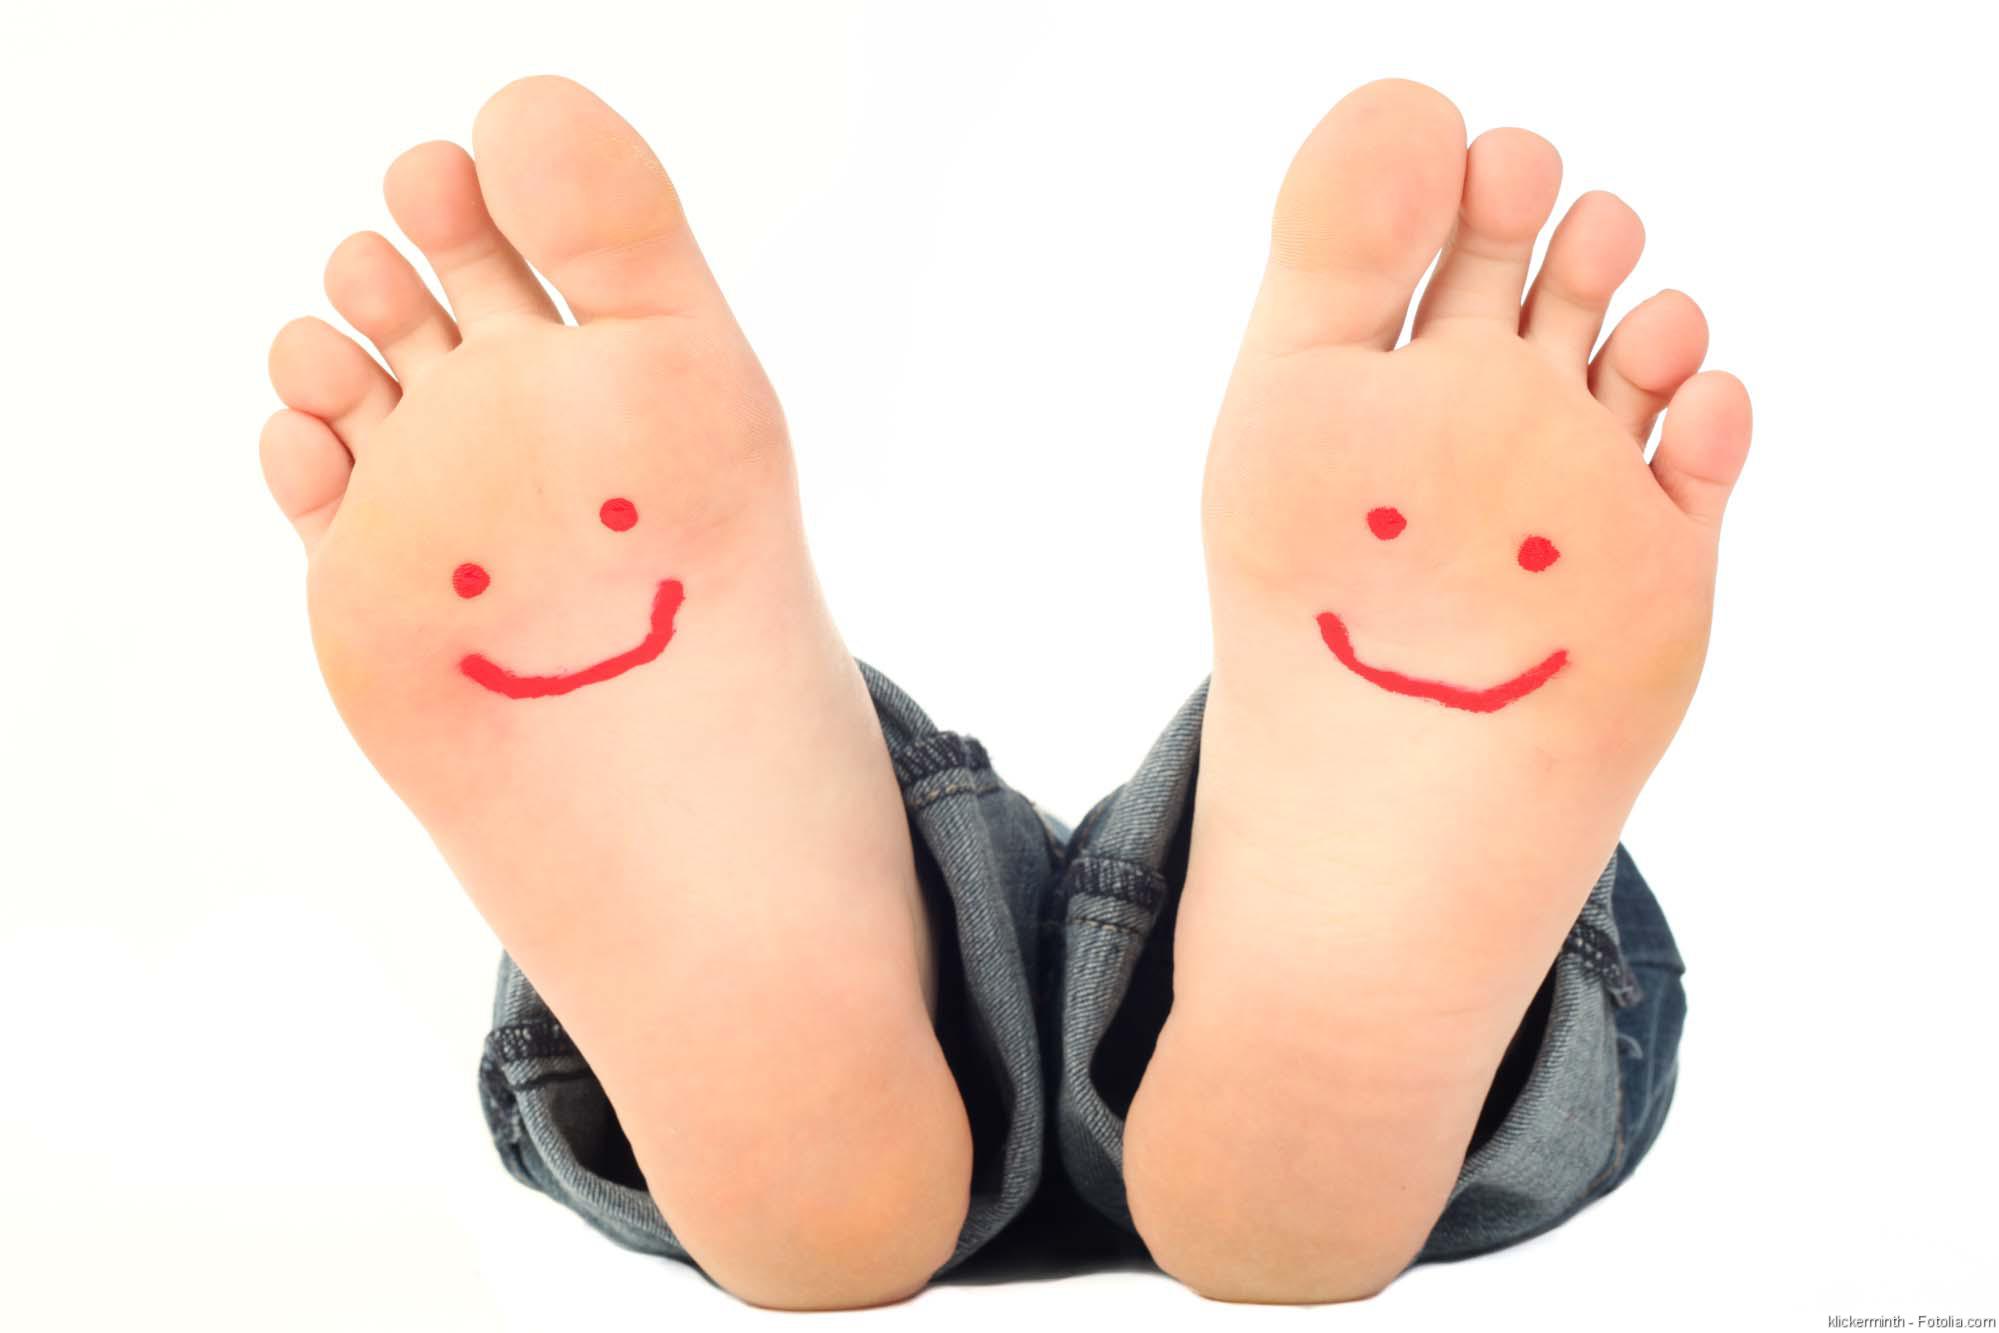 Foot по английски. Пятки улыбаются. Feet картинка для детей. Ступня на английском. Feet Flashcard.